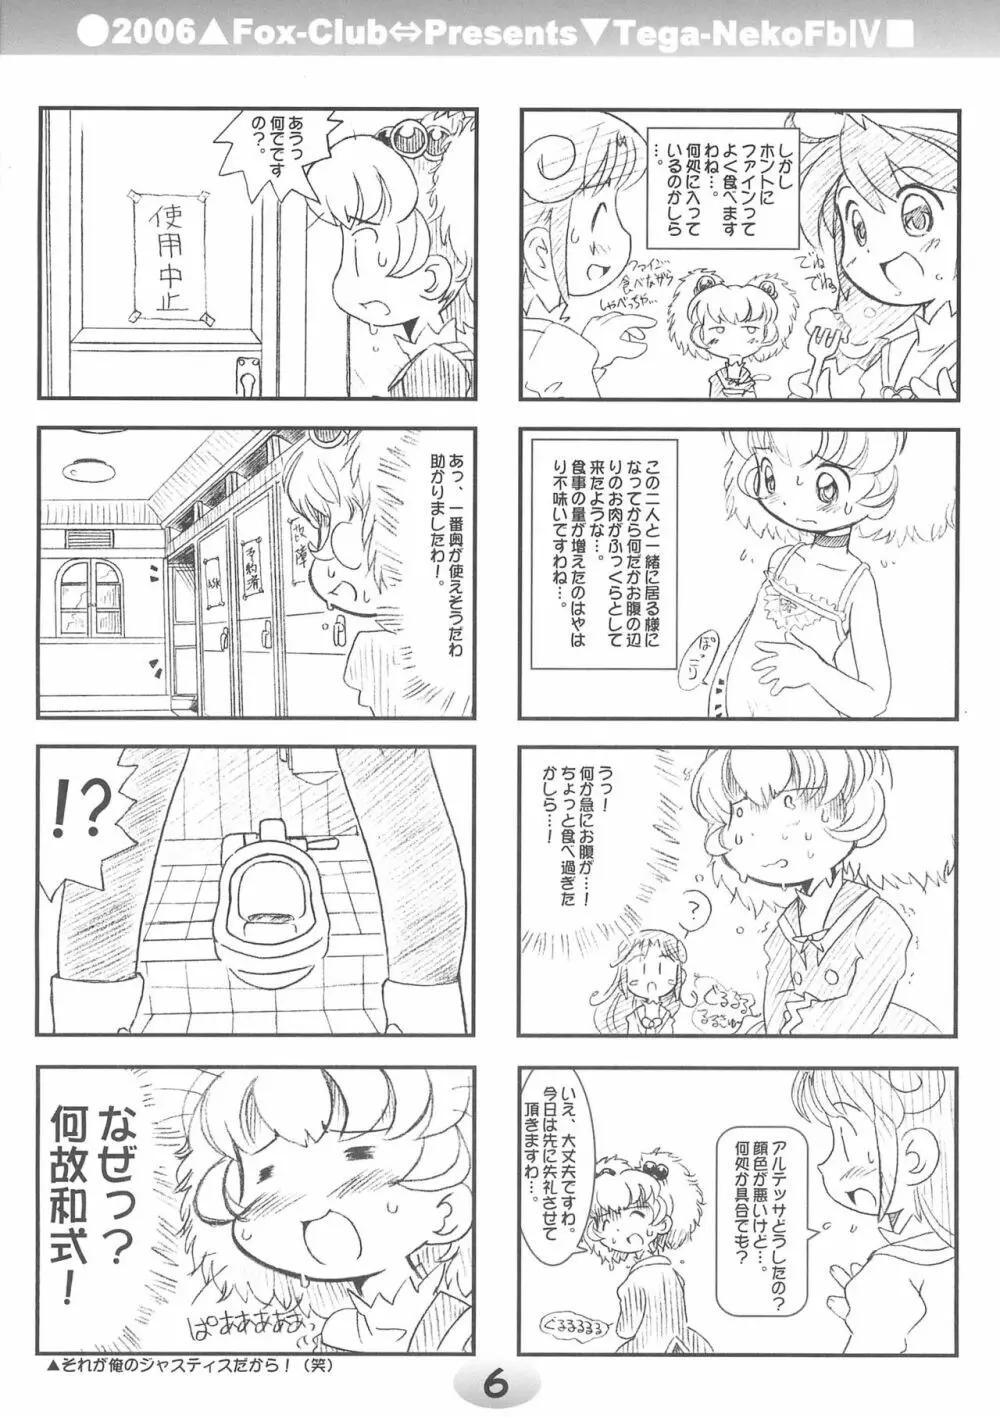 TeGa-NeKo Fb IV ふたご姫 2ぷらす 6ページ